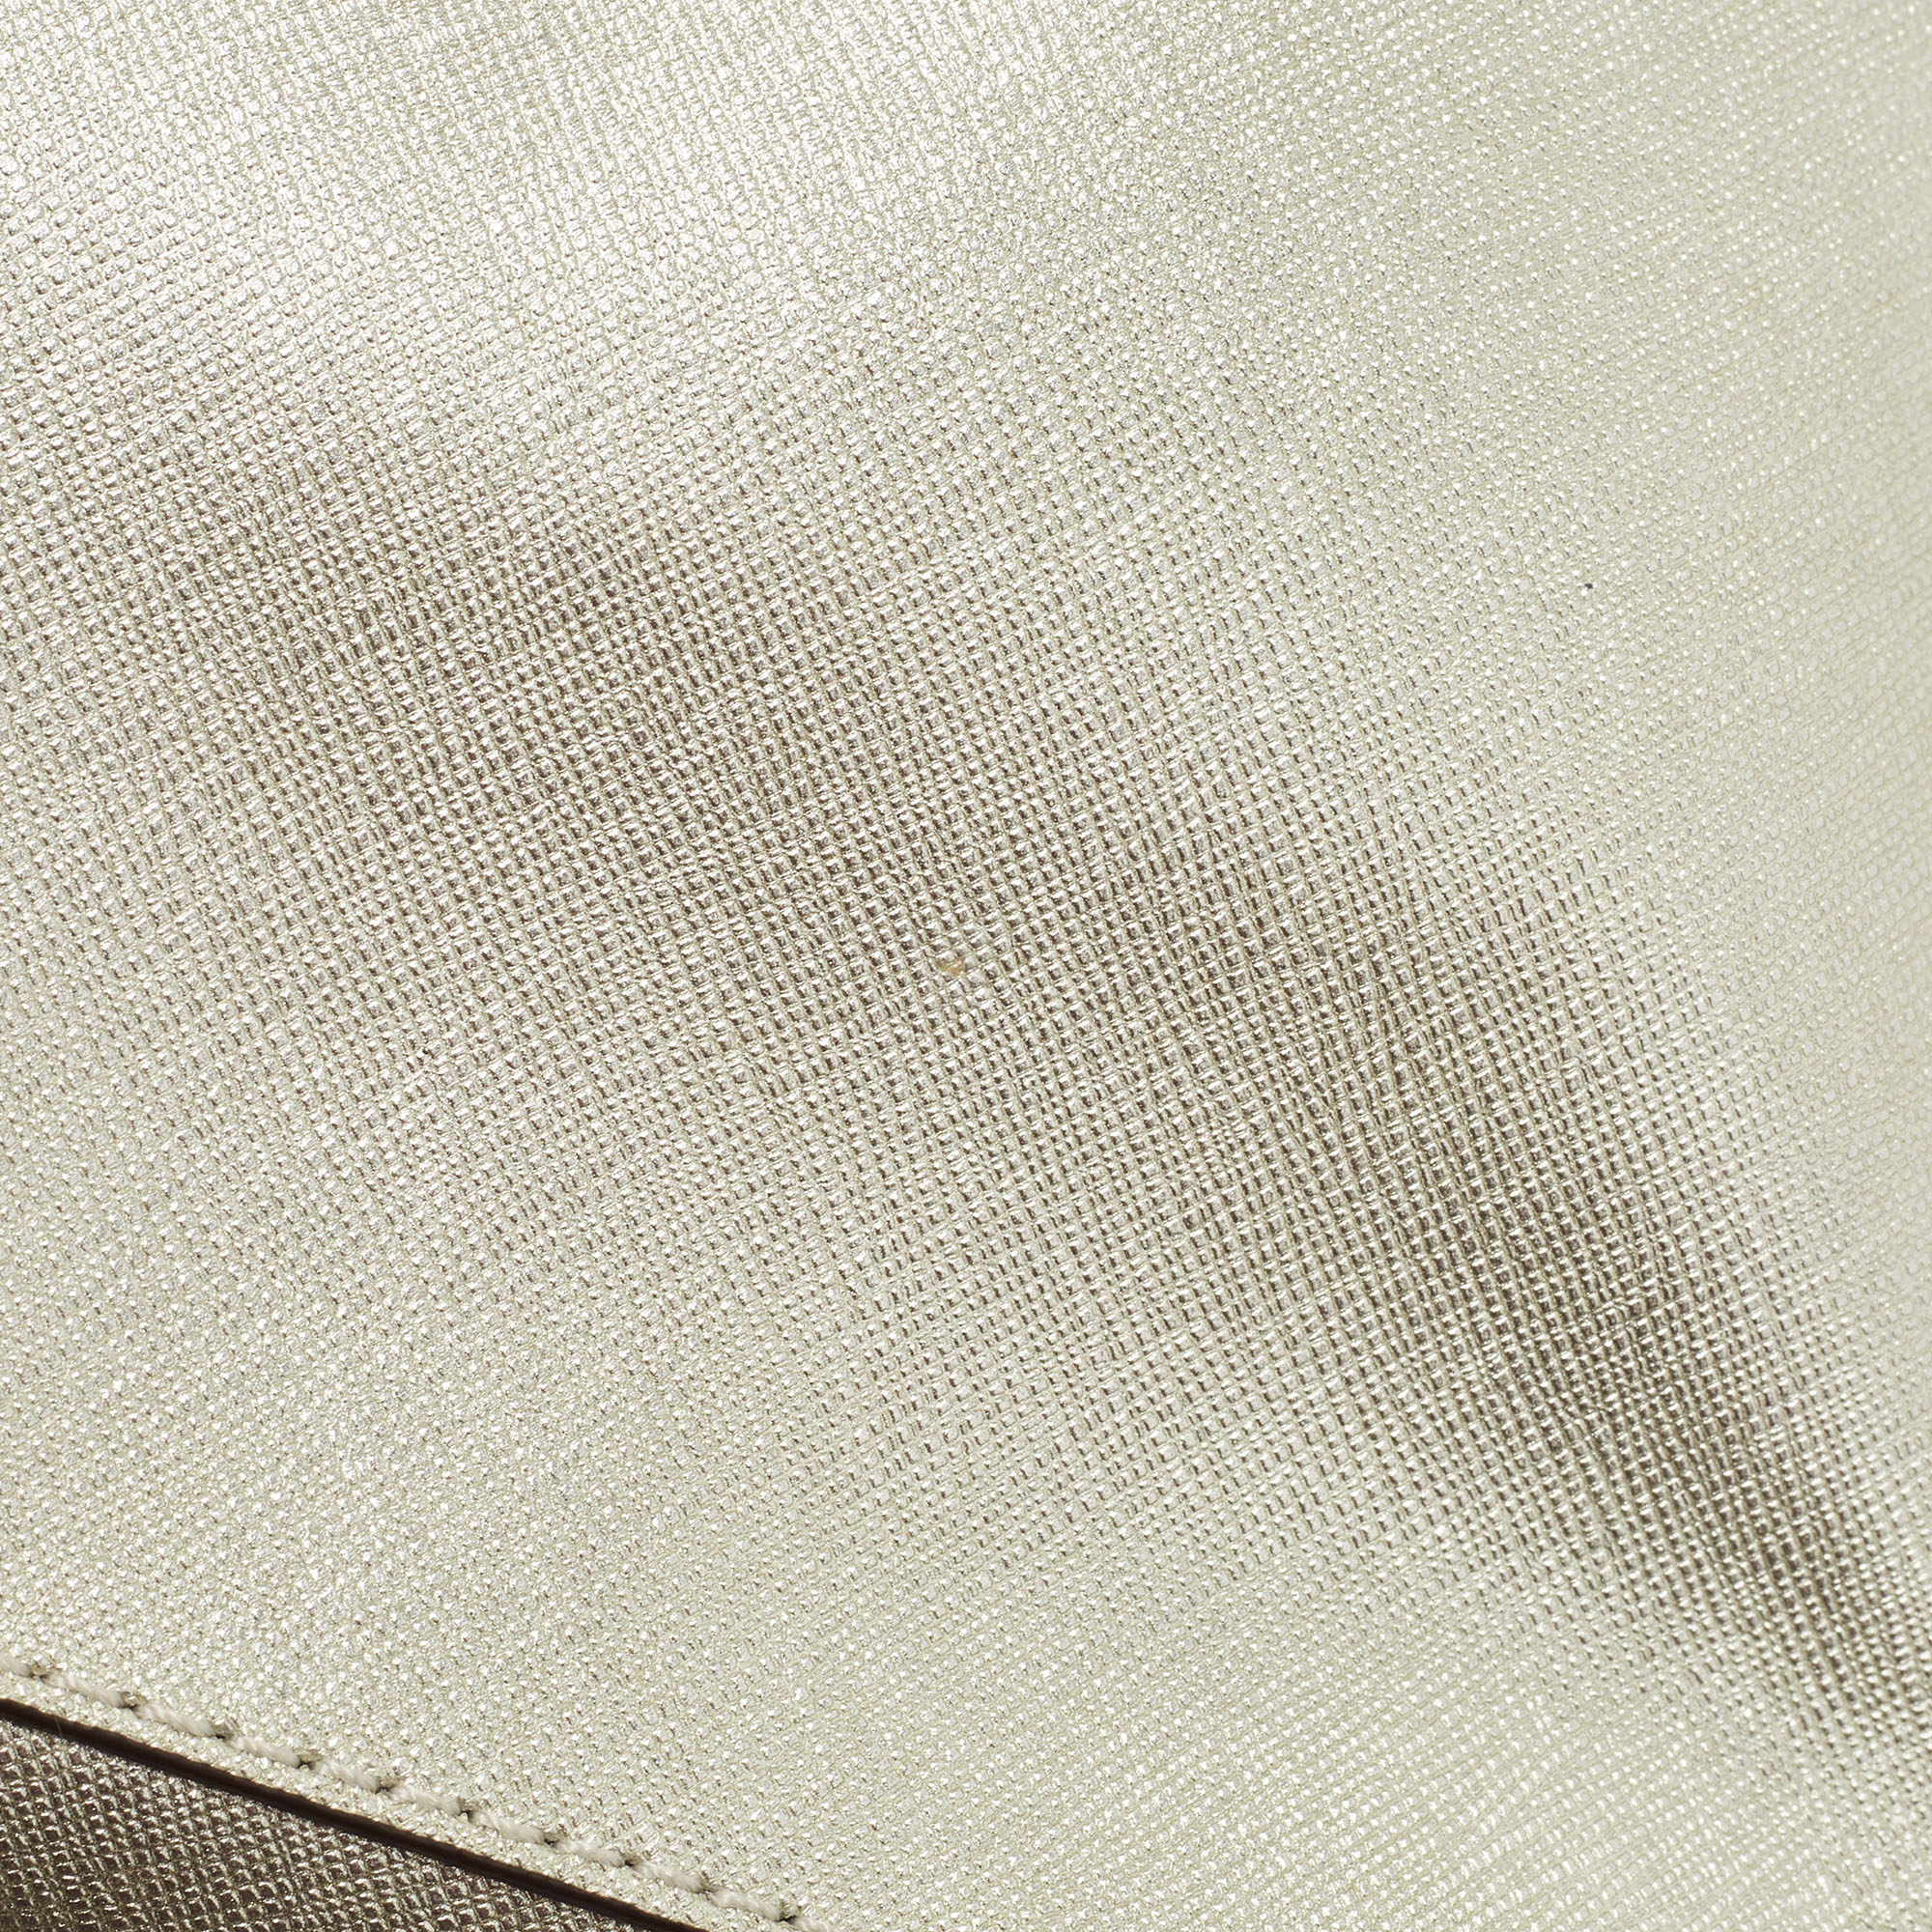 Michael Kors Silver Saffiano Leather Small Ava Top Handle Bag